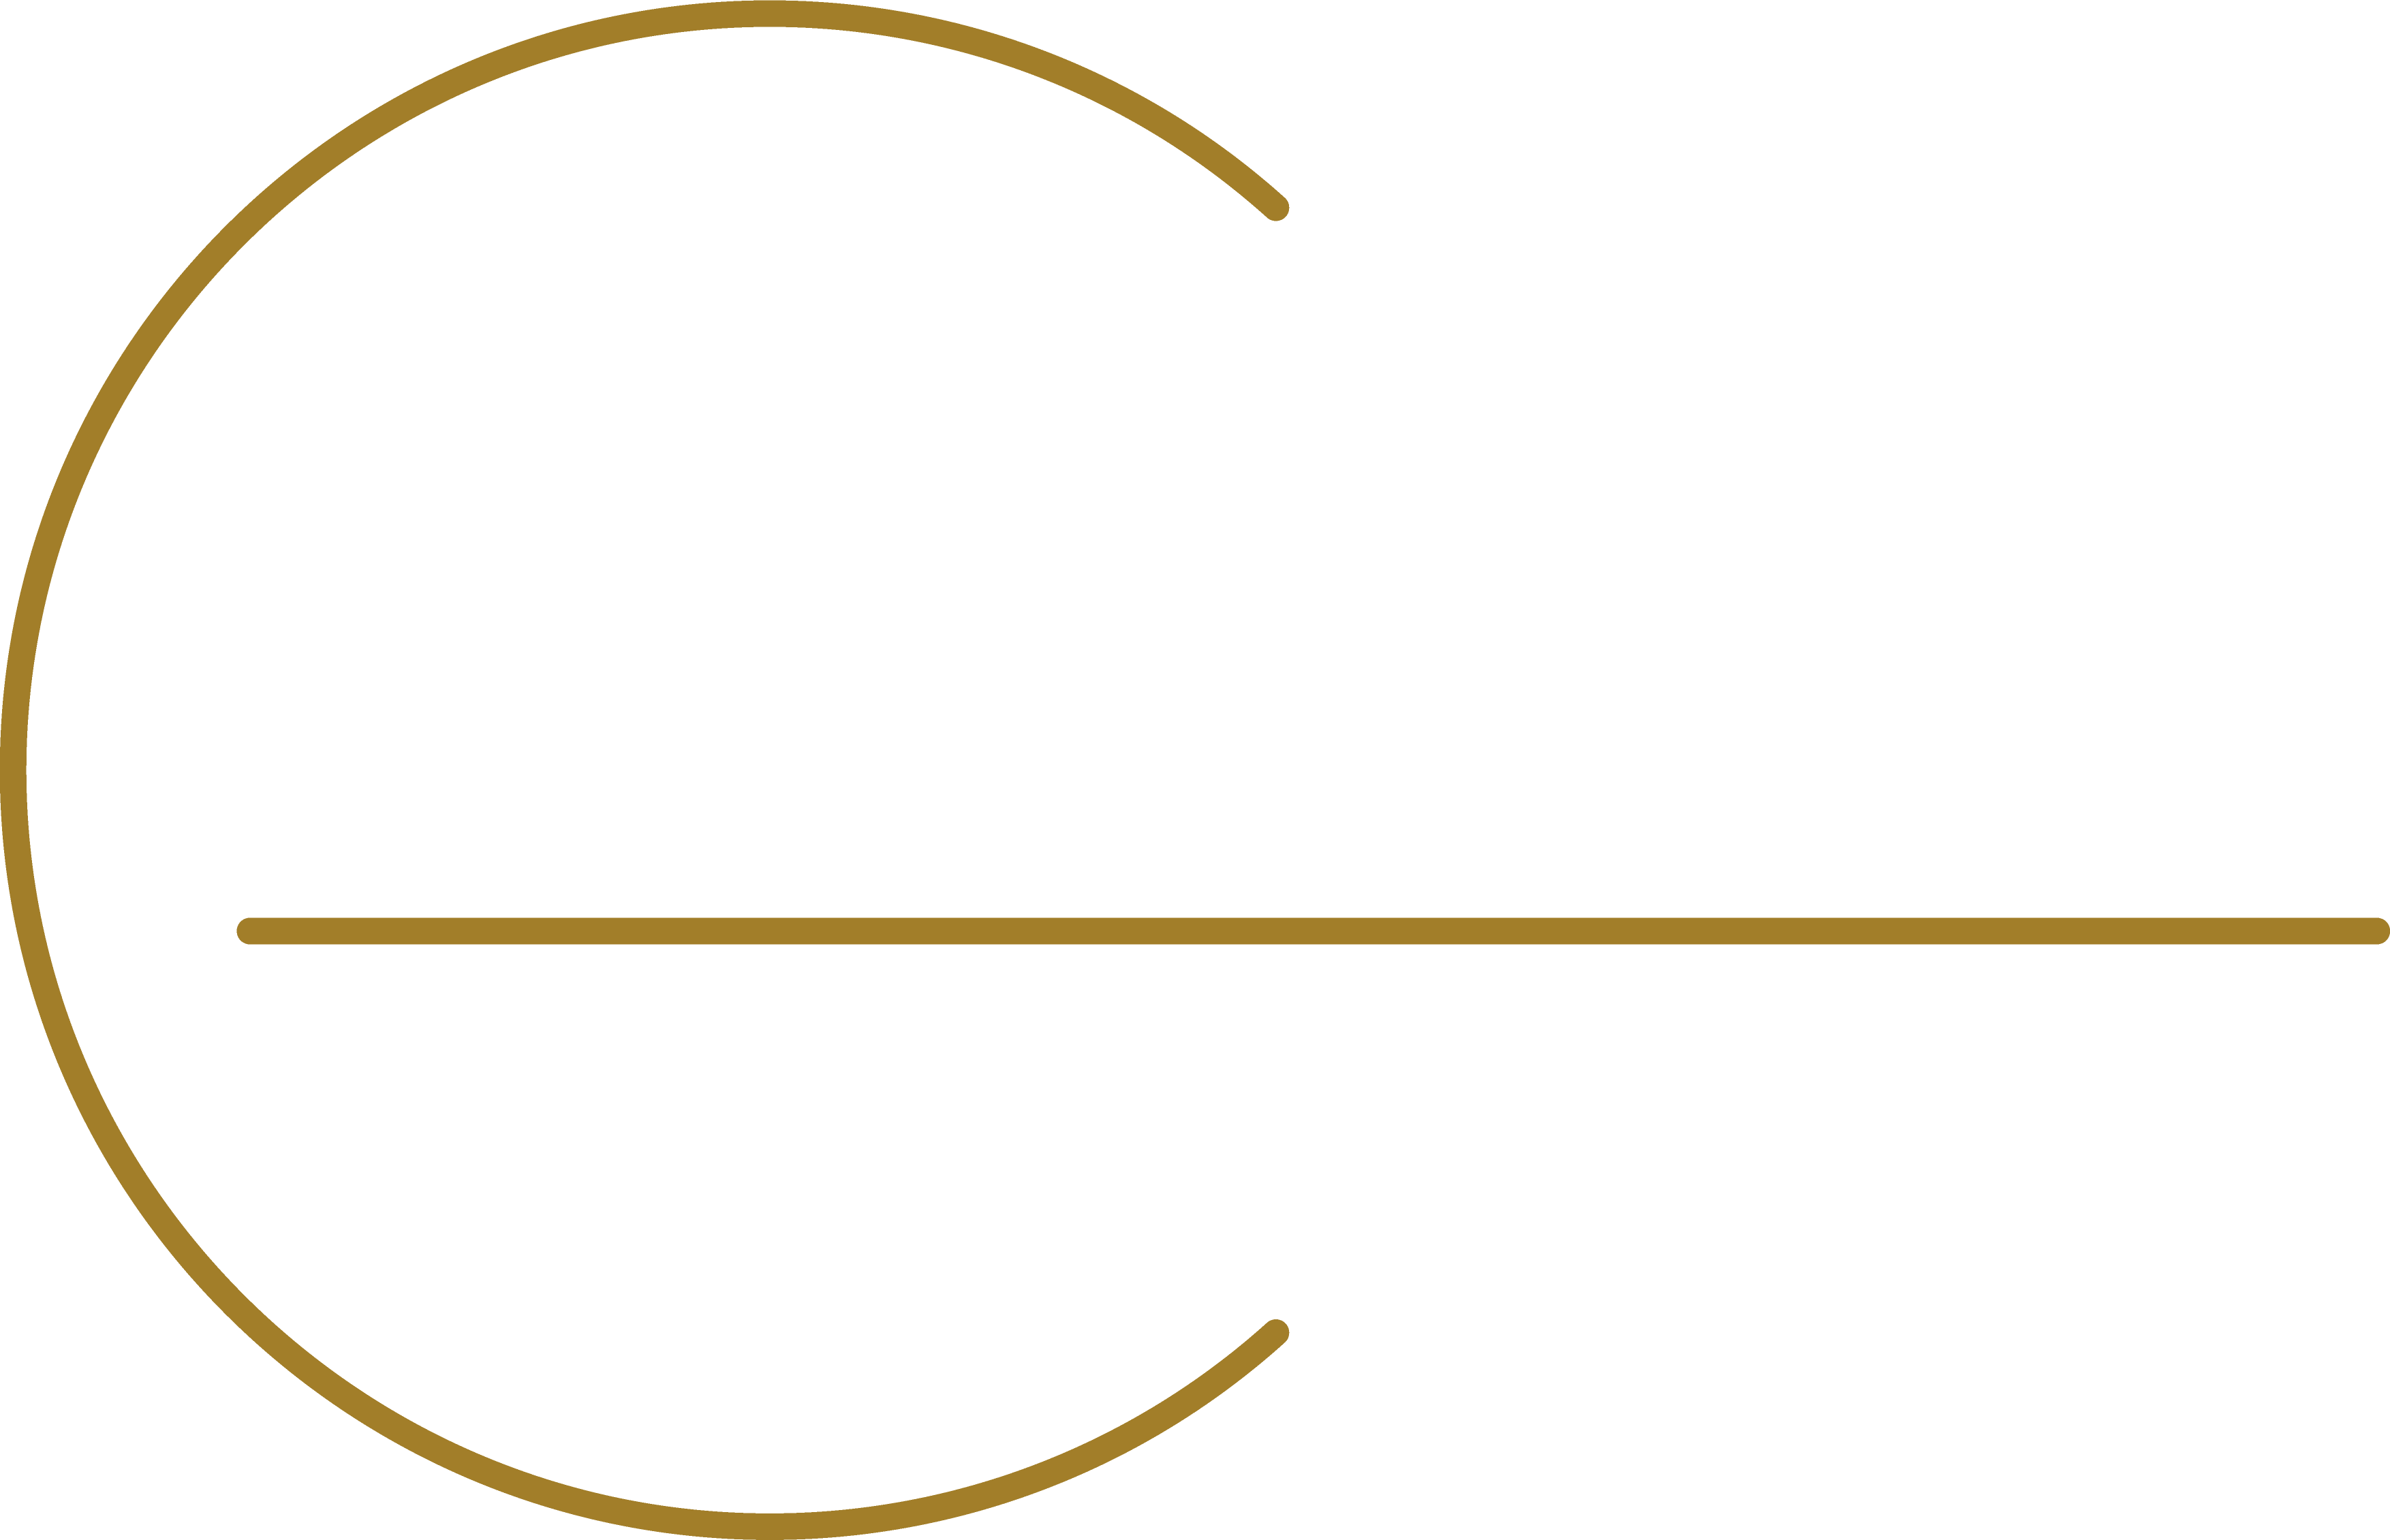 Zone Great